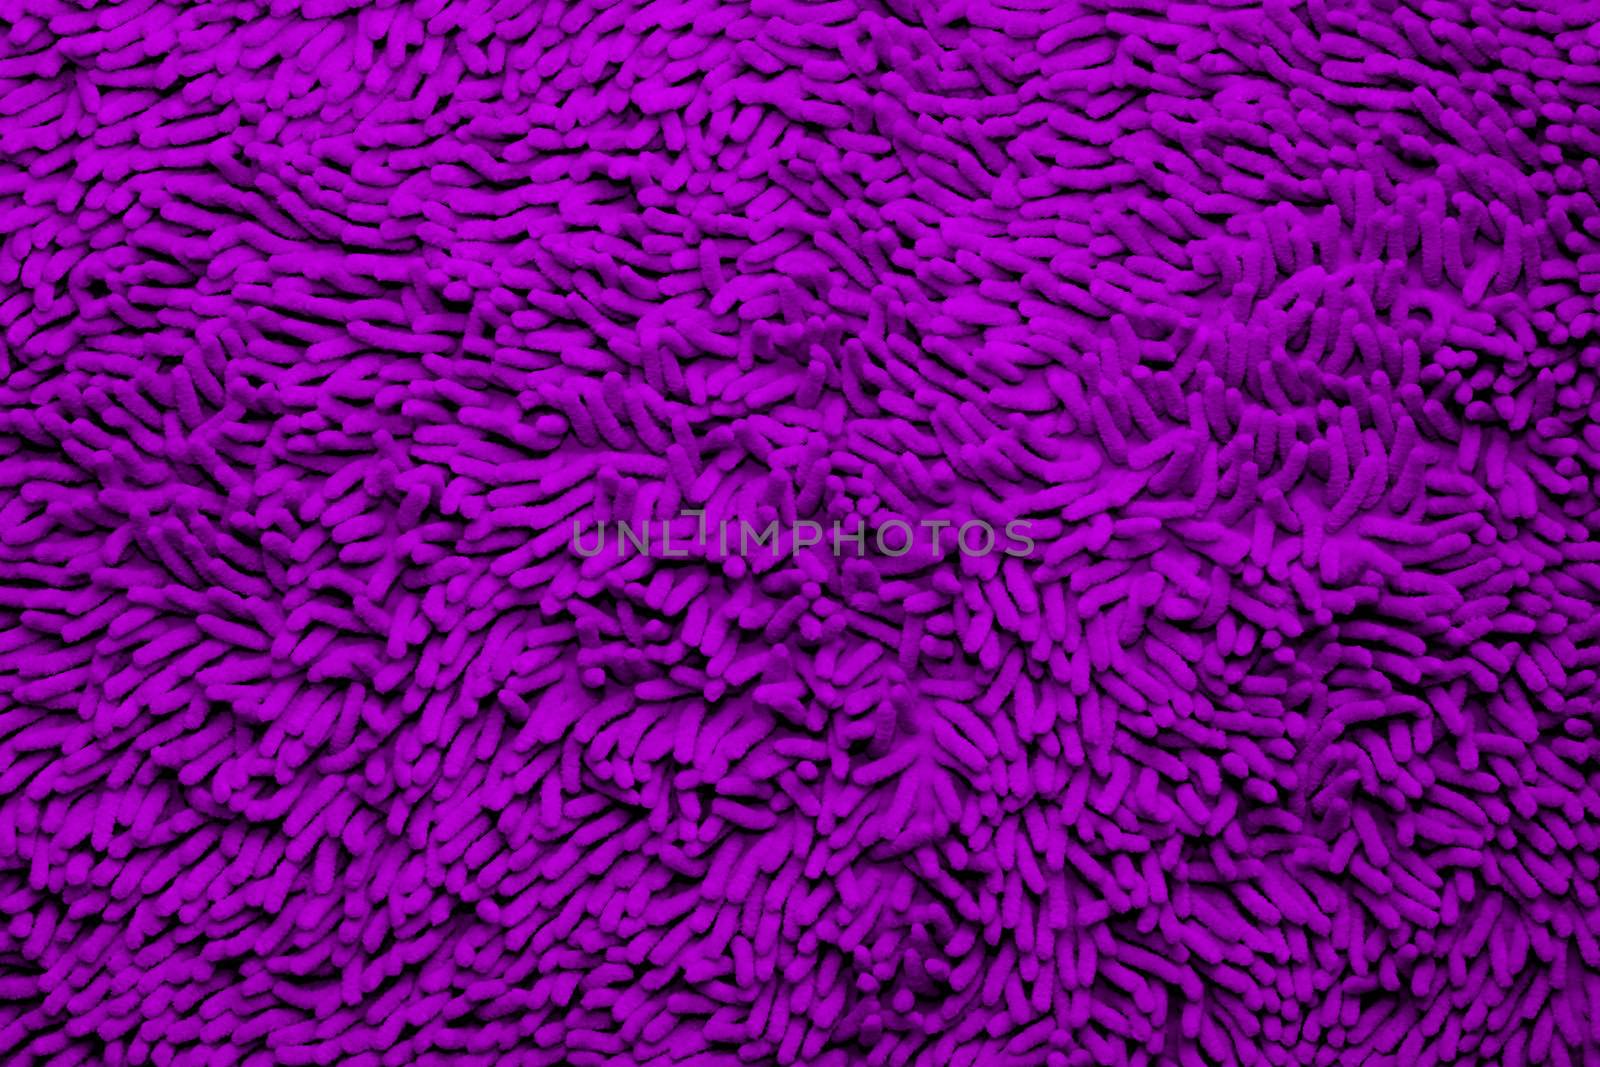 Purple Microfiber bath mat in the background